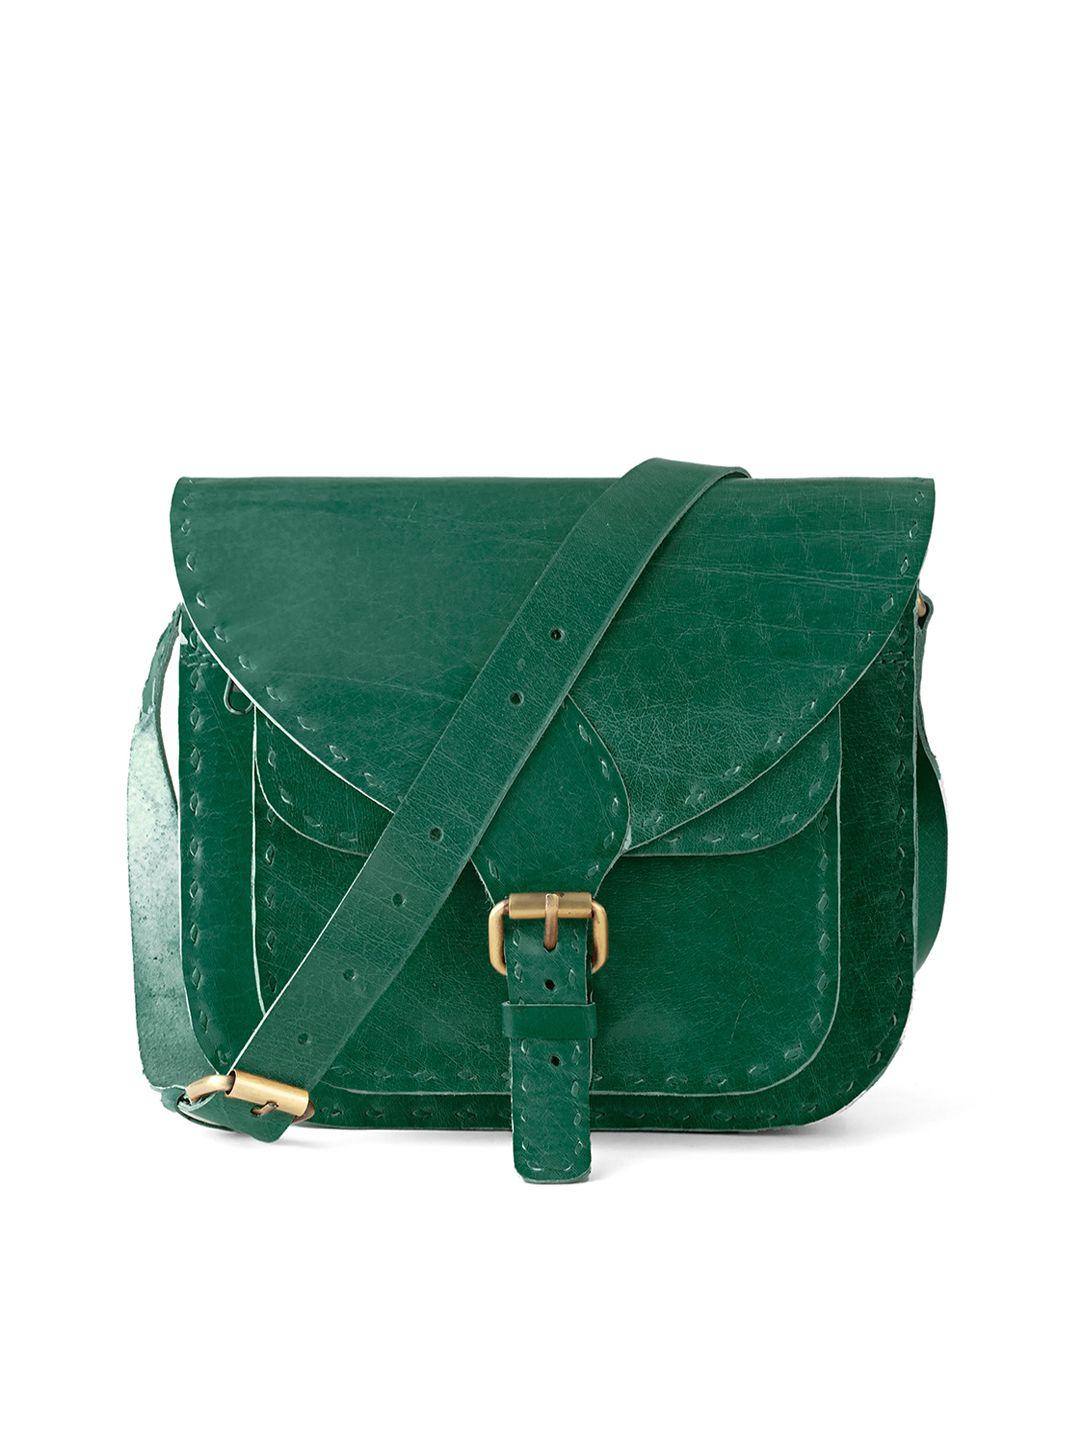 goatter women green textured leather structured sling bag